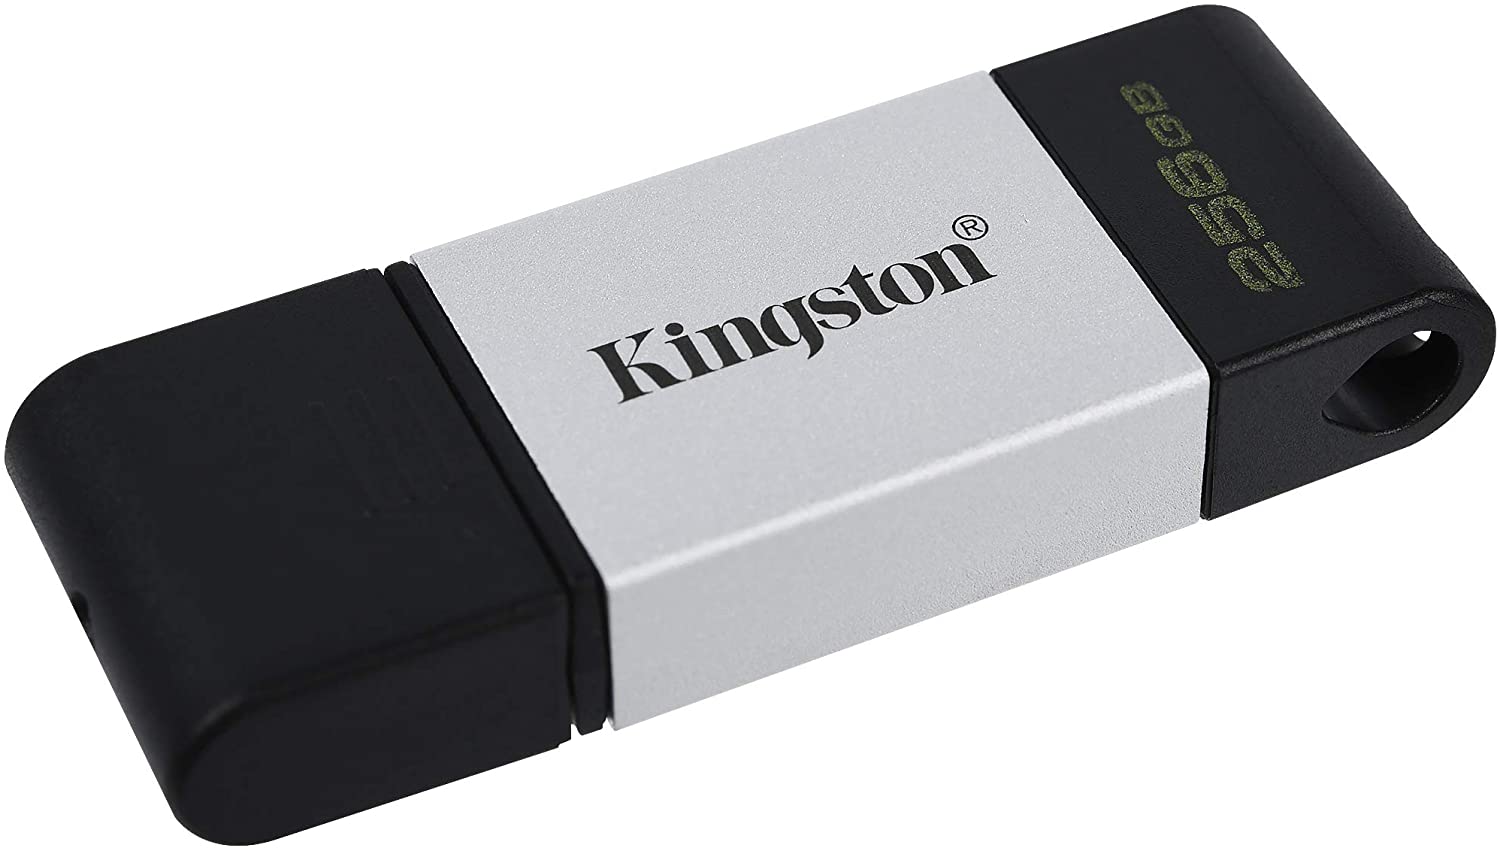 Kingston DataTraveler 80 Memoria USB Tipo C 256GB - USB-C 3.2 Gen 1 - 200  MB/s en Lectura - Con Tapa - Diseño Metalico (Pendrive) > Informática >  Almacenamiento Externo > Memorias USB / Pendrives